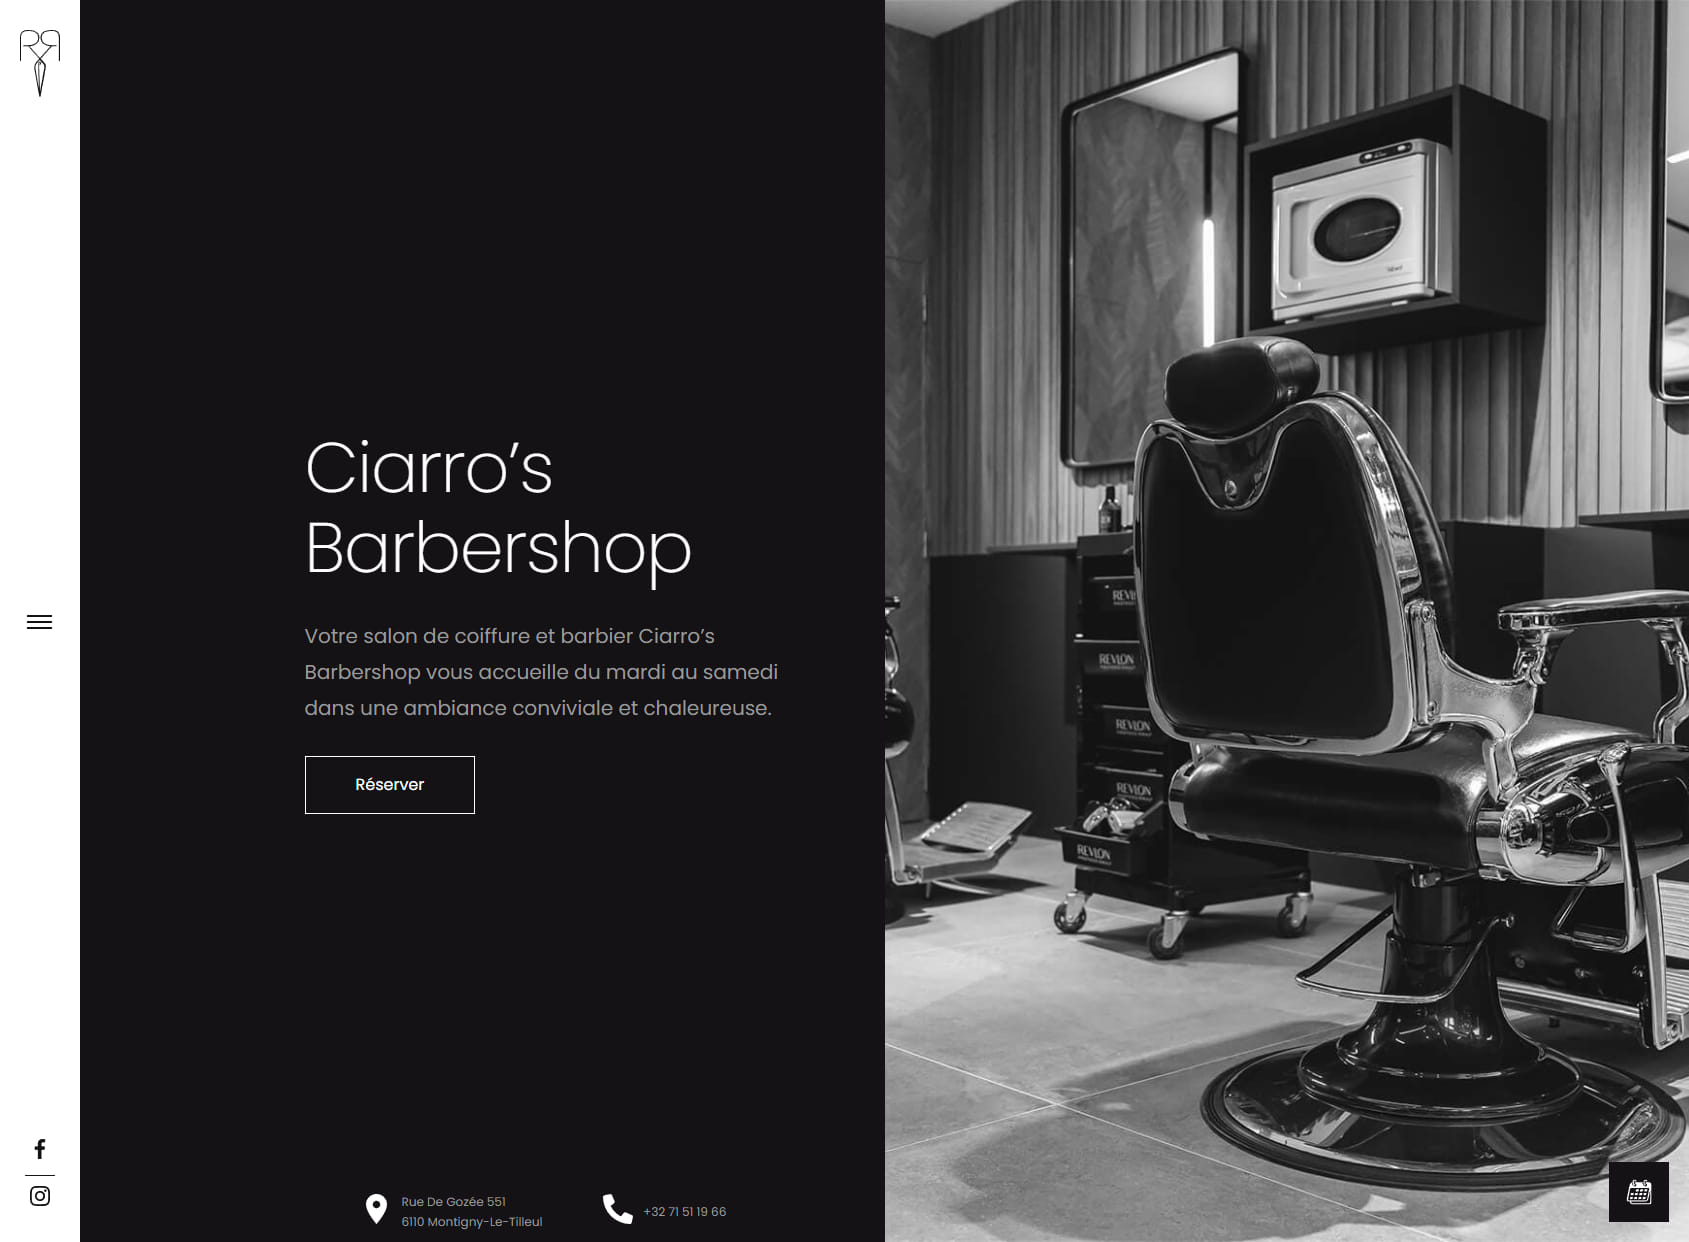 Ciarro's Barbershop